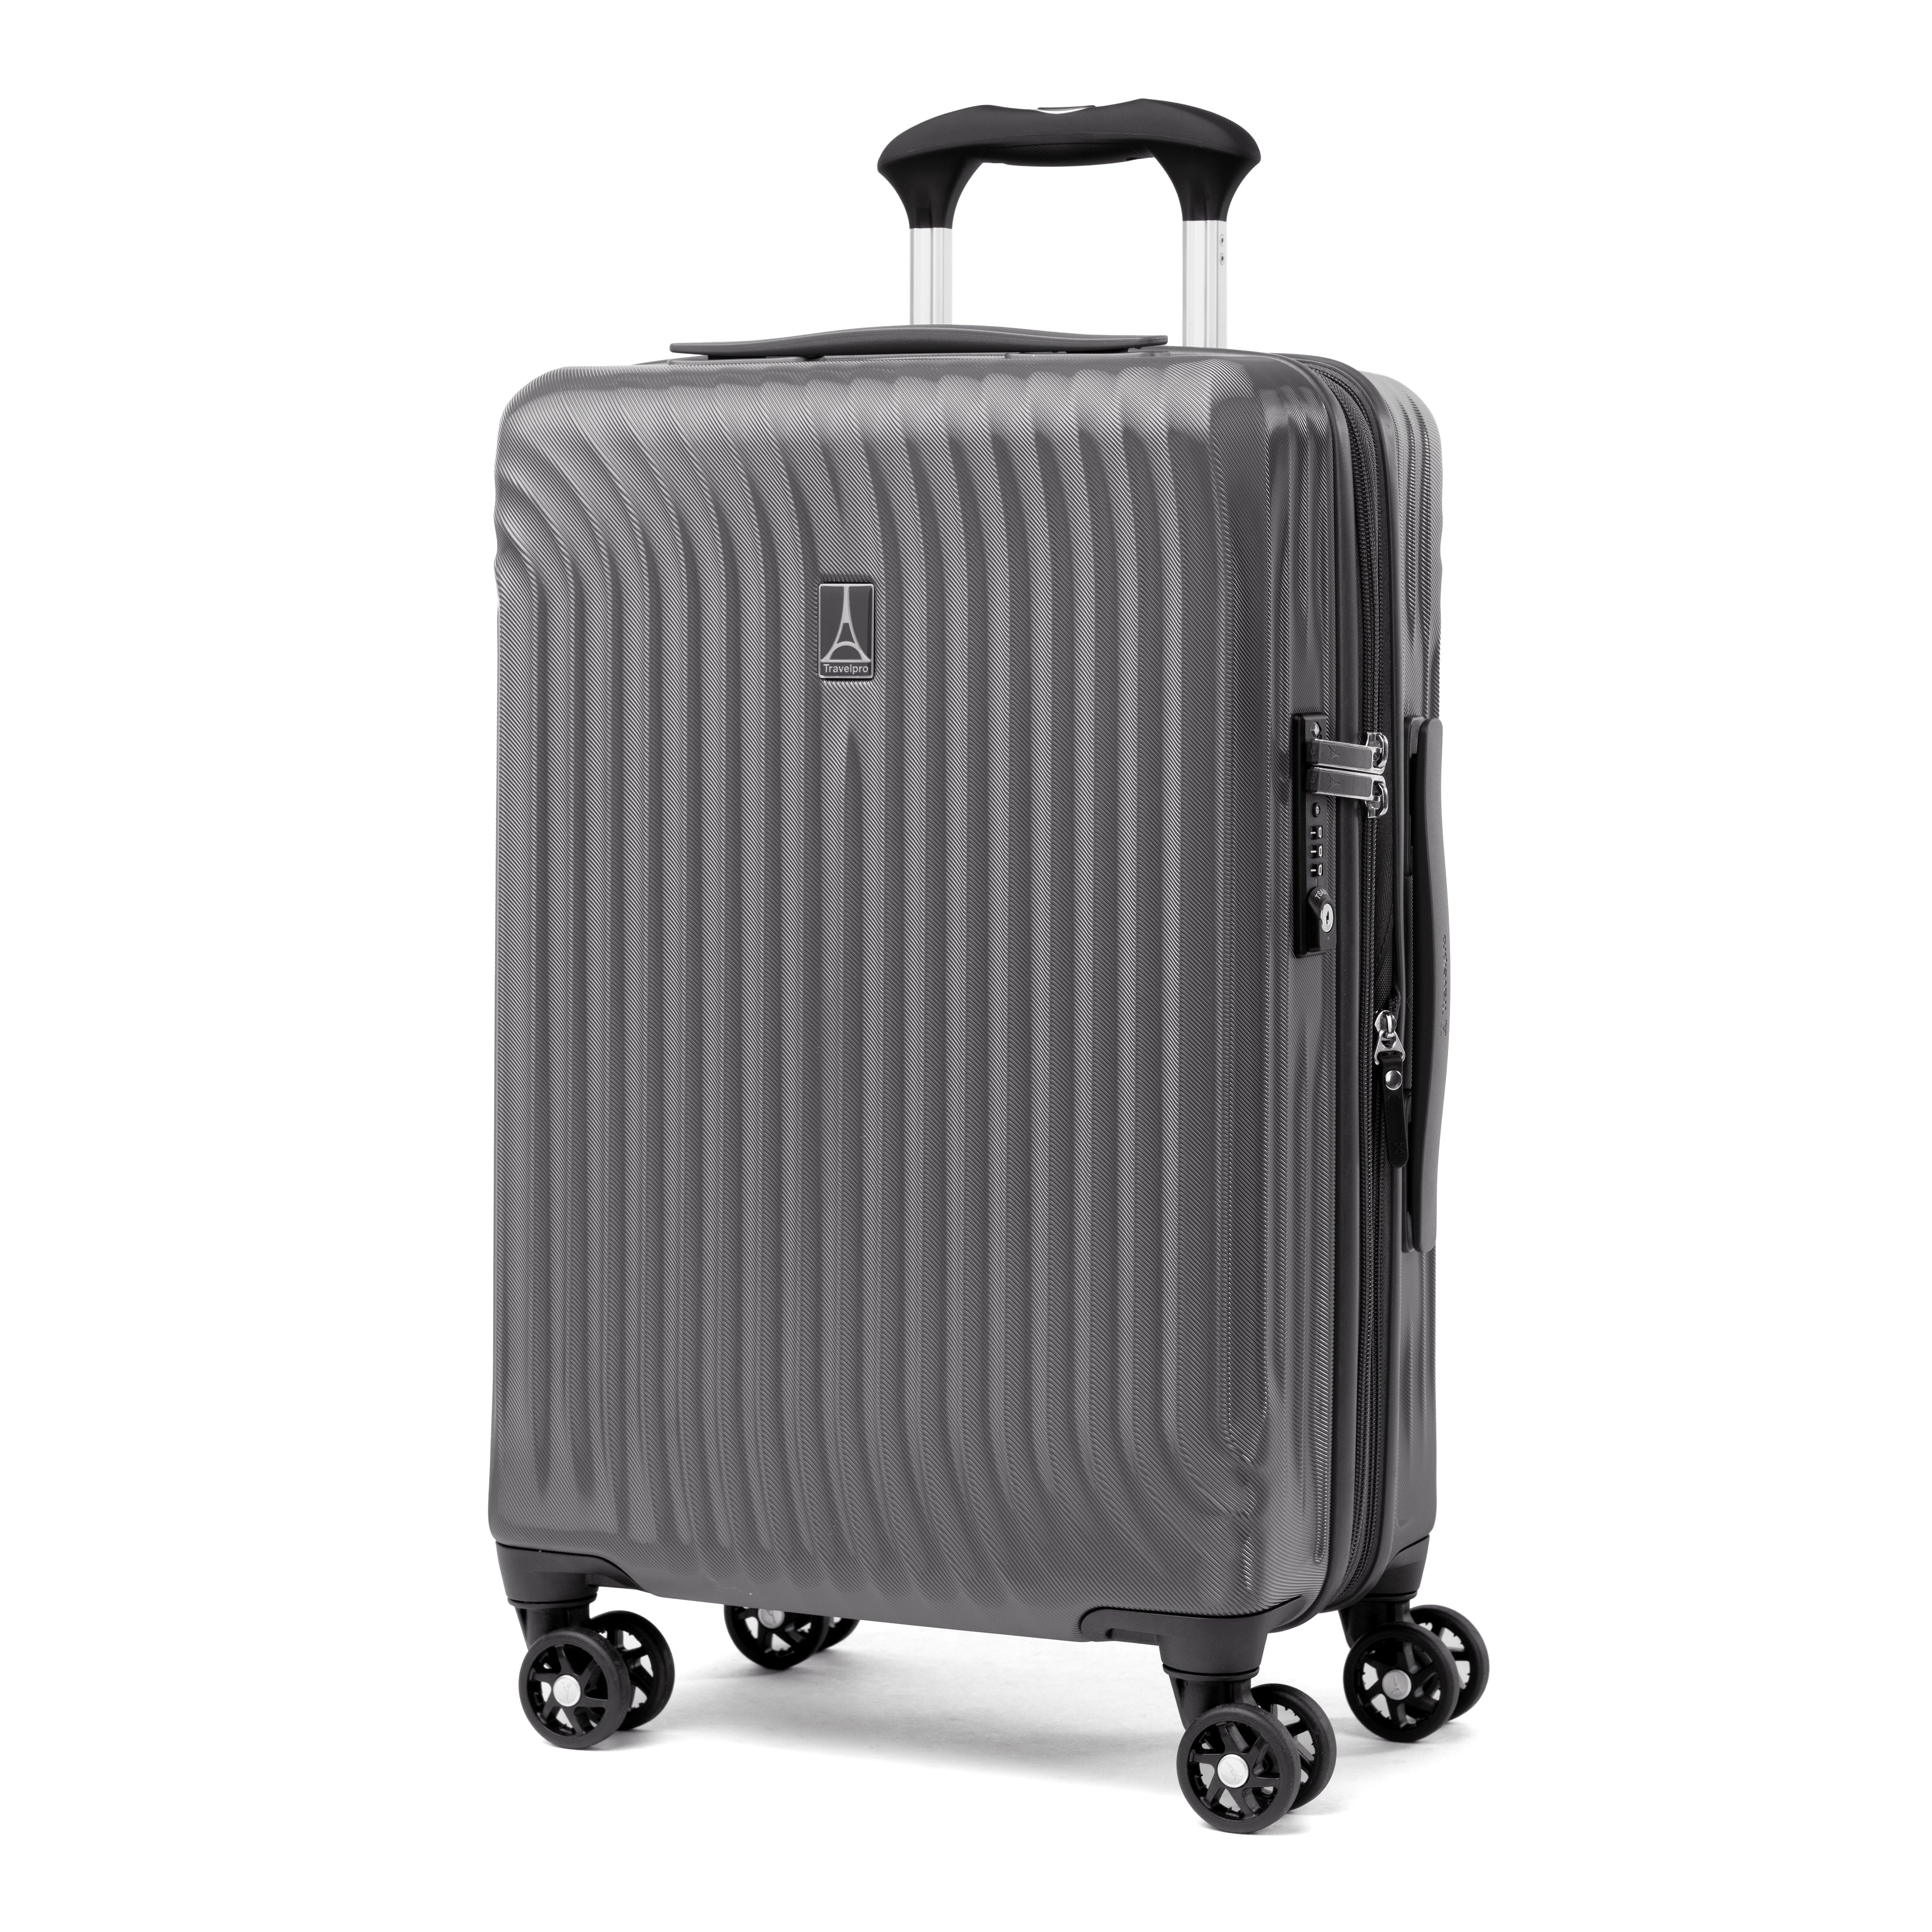 Travelpro Maxlite Air Hardside Expandable Luggage, 8 Spinner Wheels, Lightweight Hard Shell Polycarbonate U1